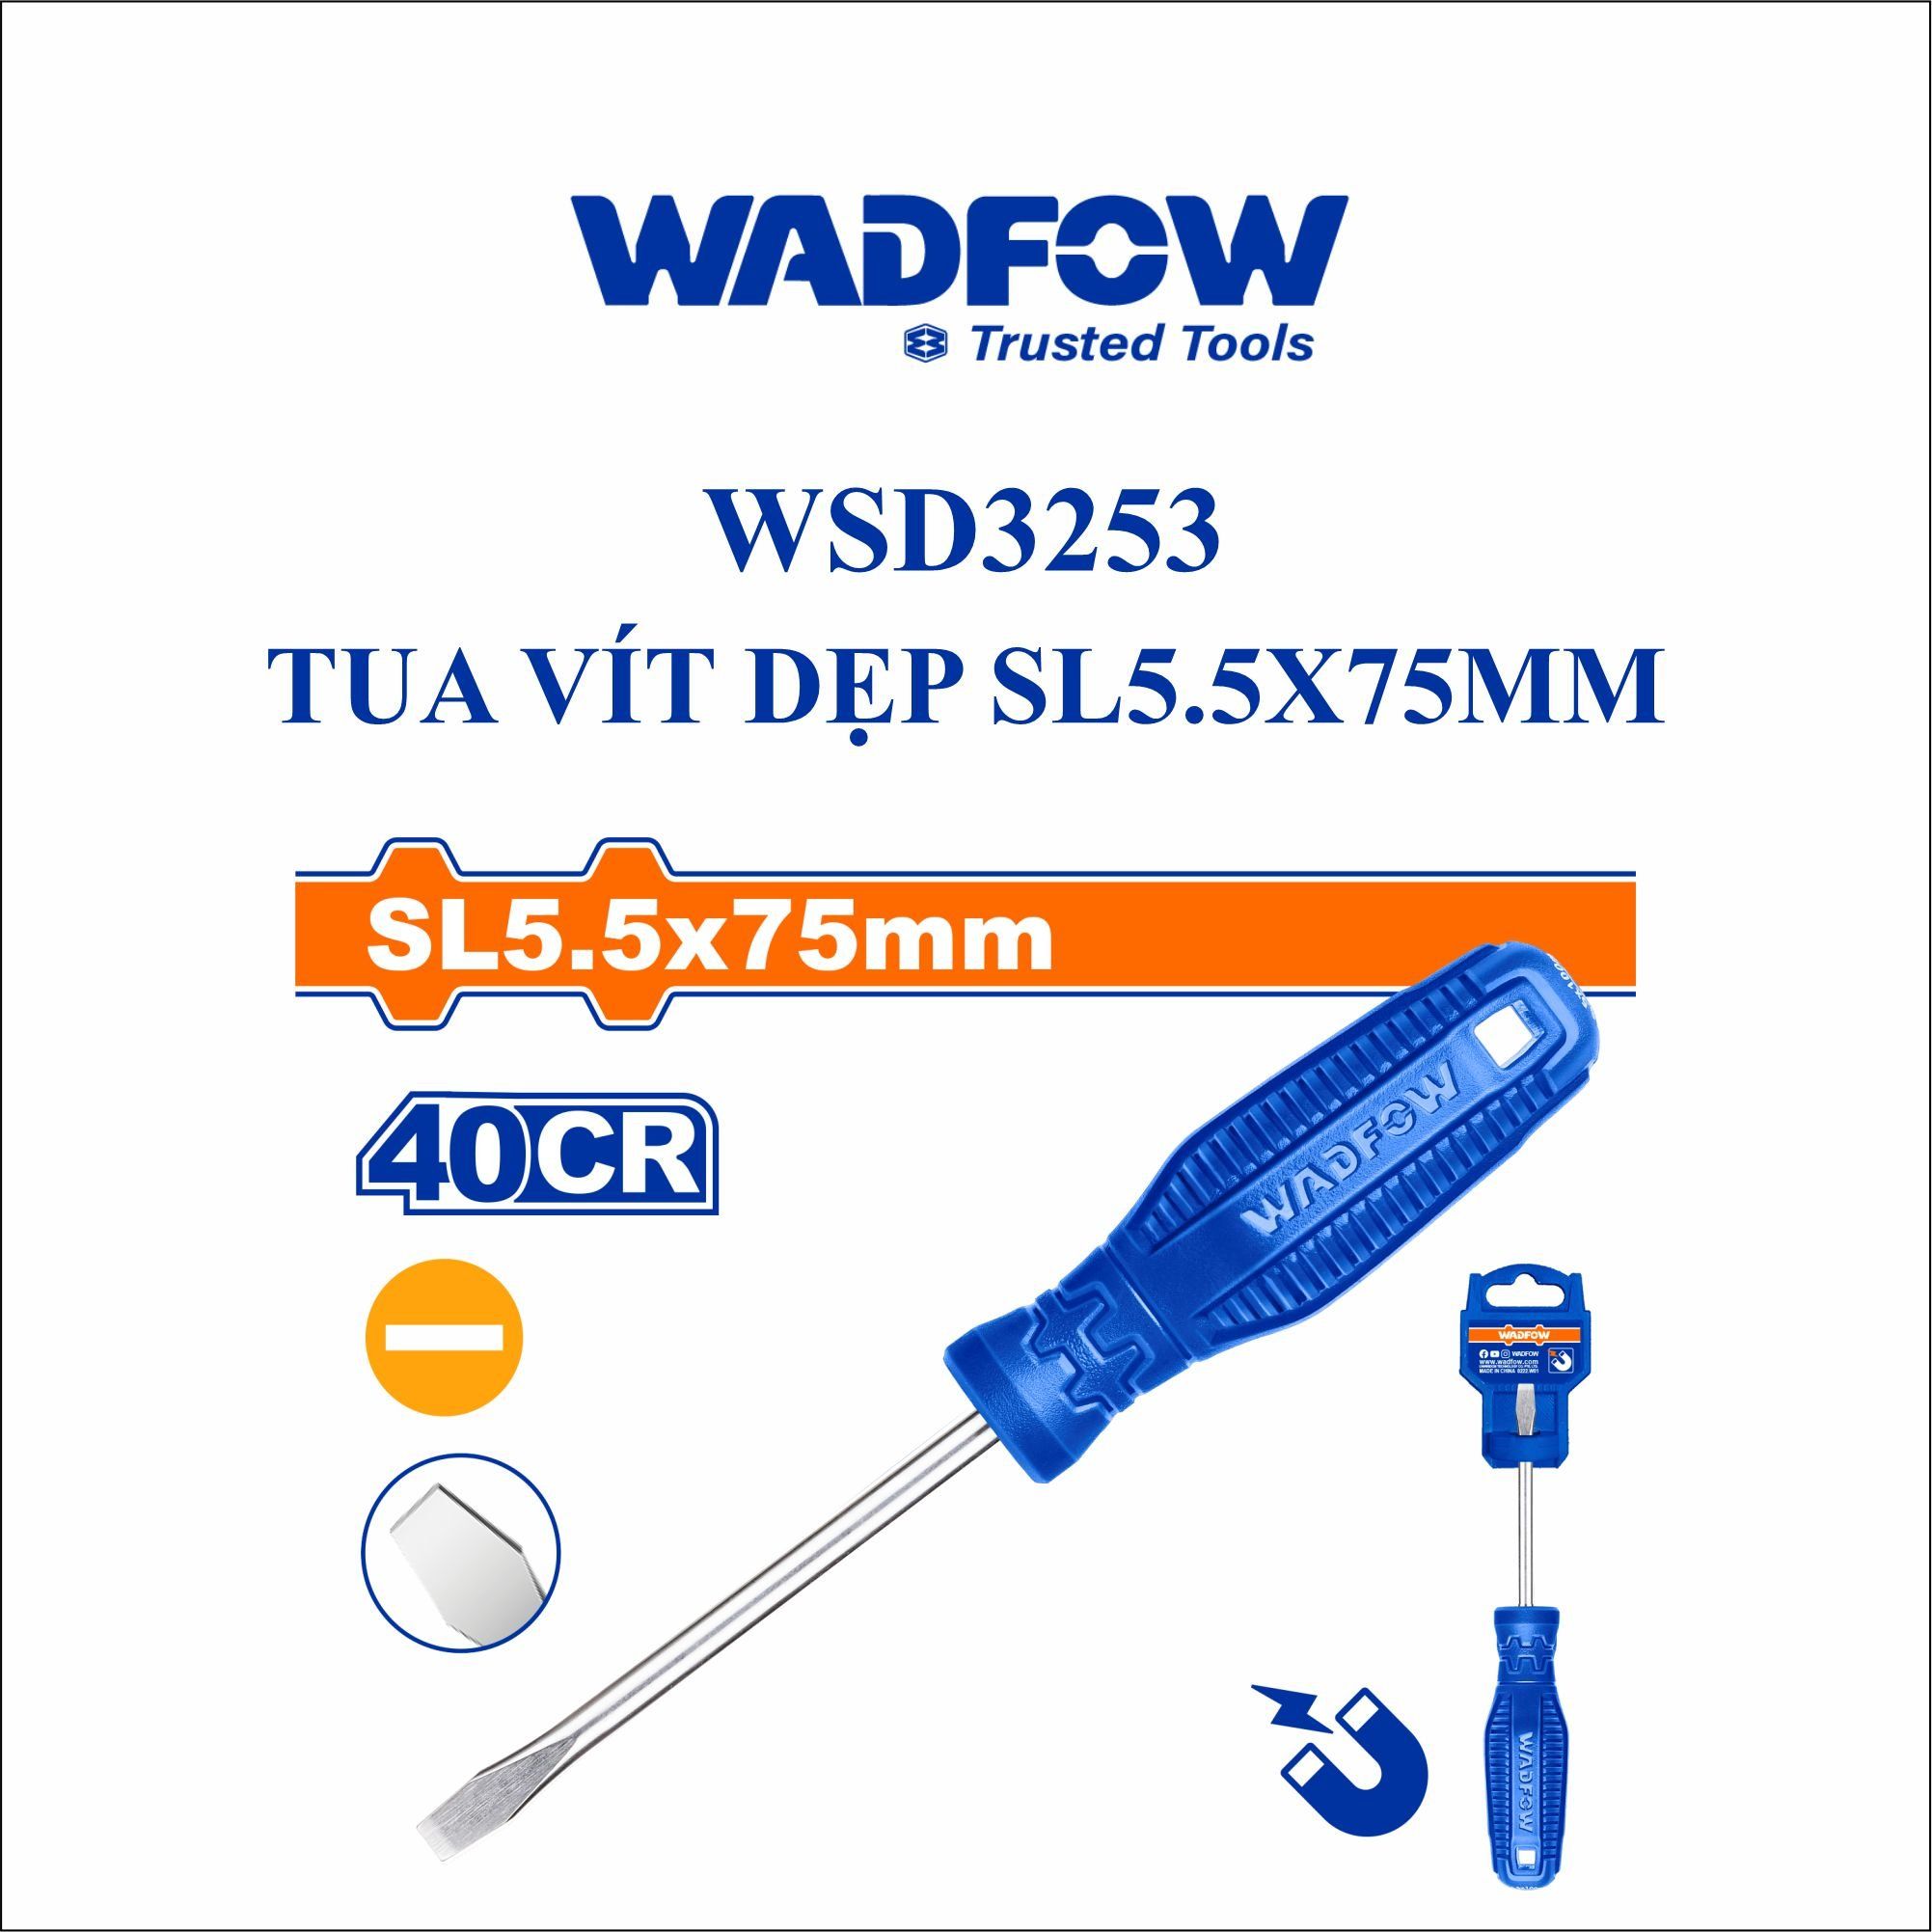  Tua vít dẹp SL5.5x75mm WADFOW WSD3253 